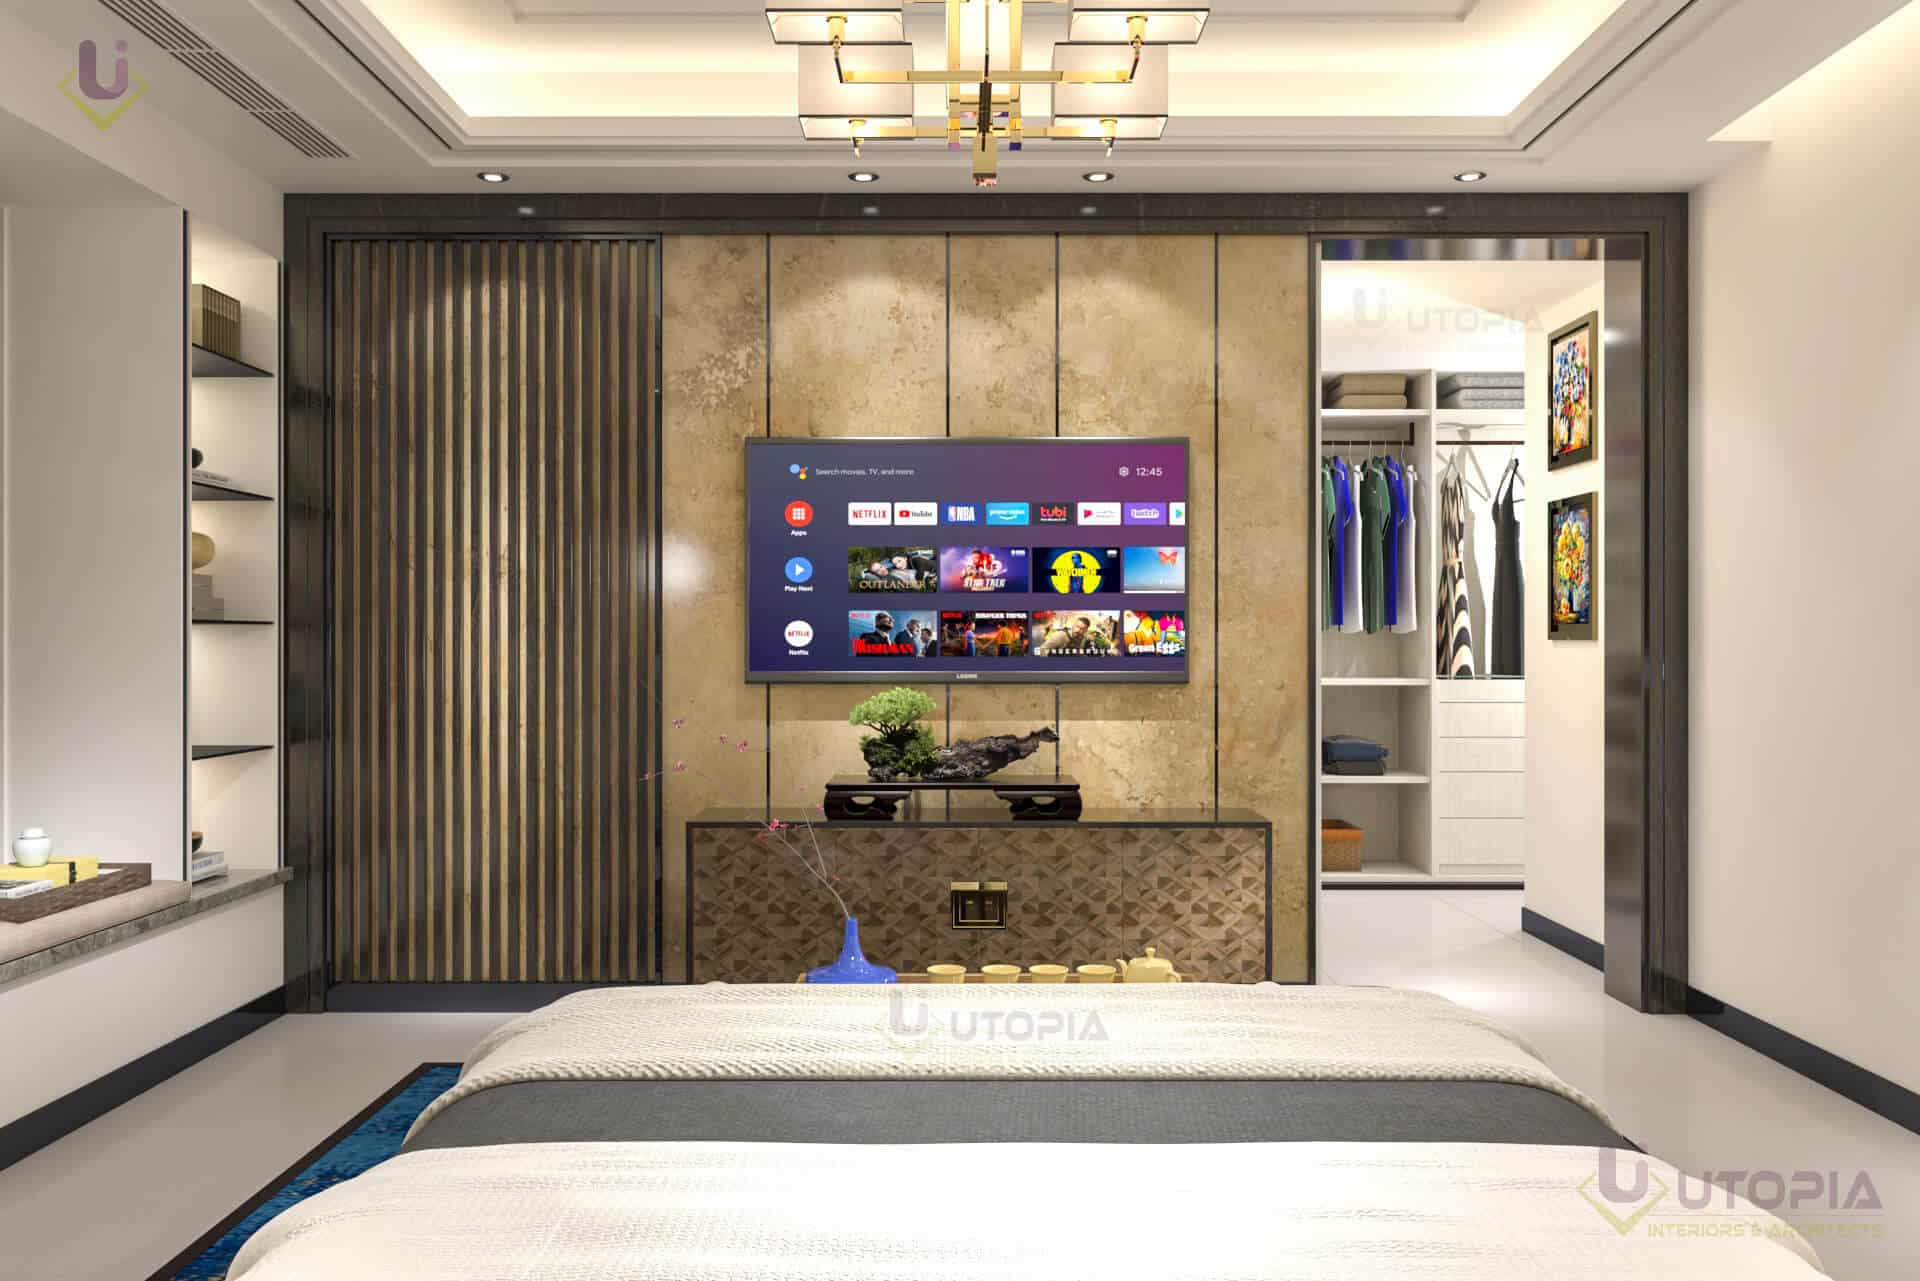 Luxurious-bedroom-design-ideas-jpg